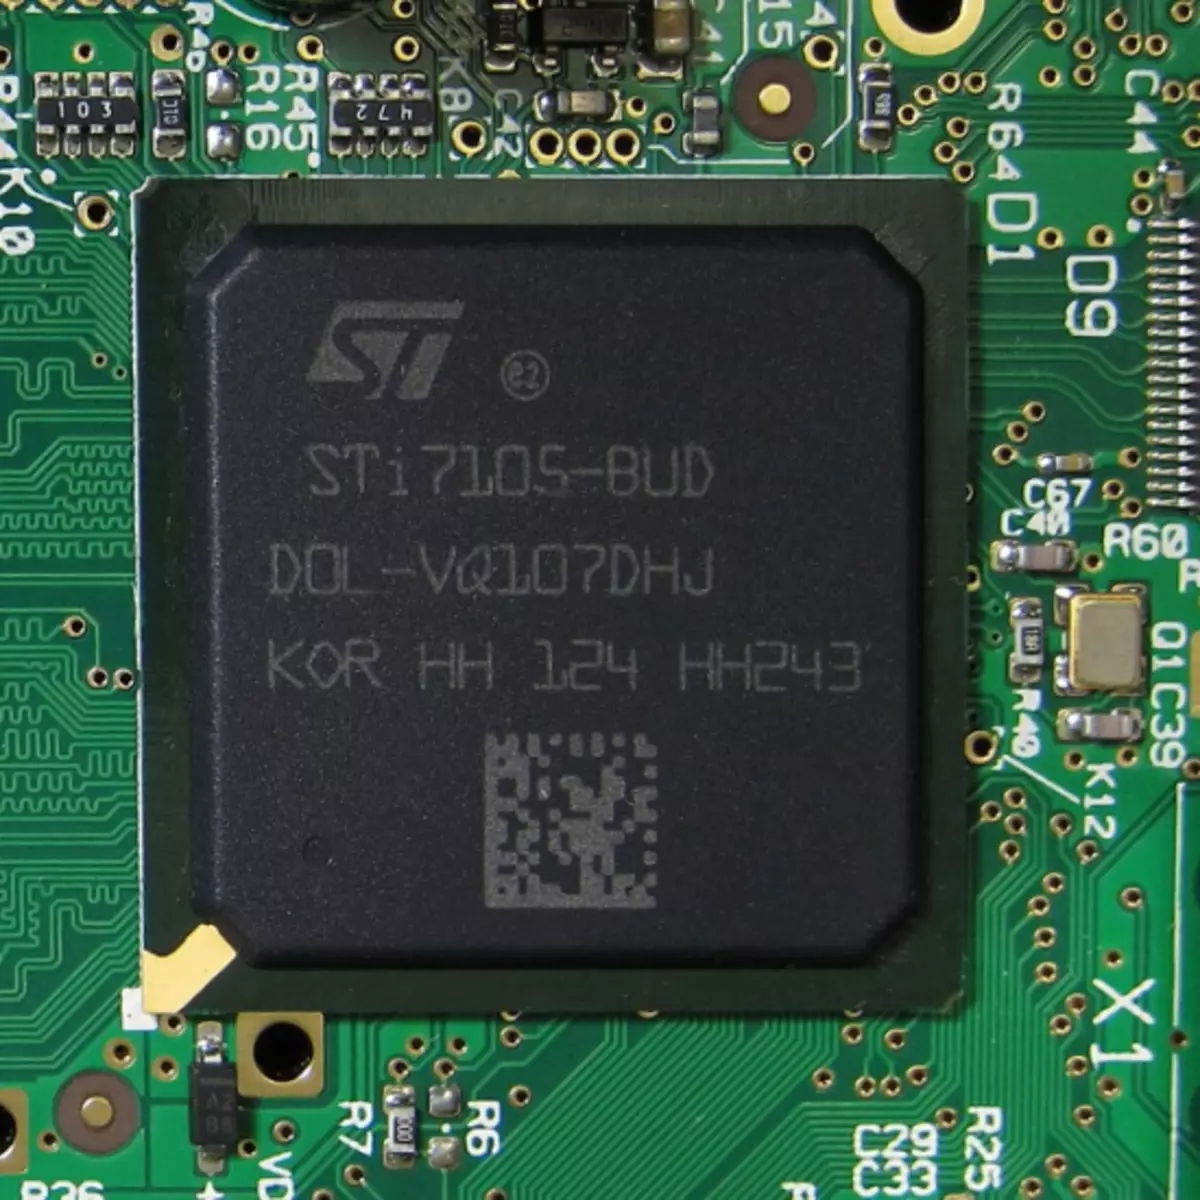 Mag 250 STI7105-BUD پروسیسر